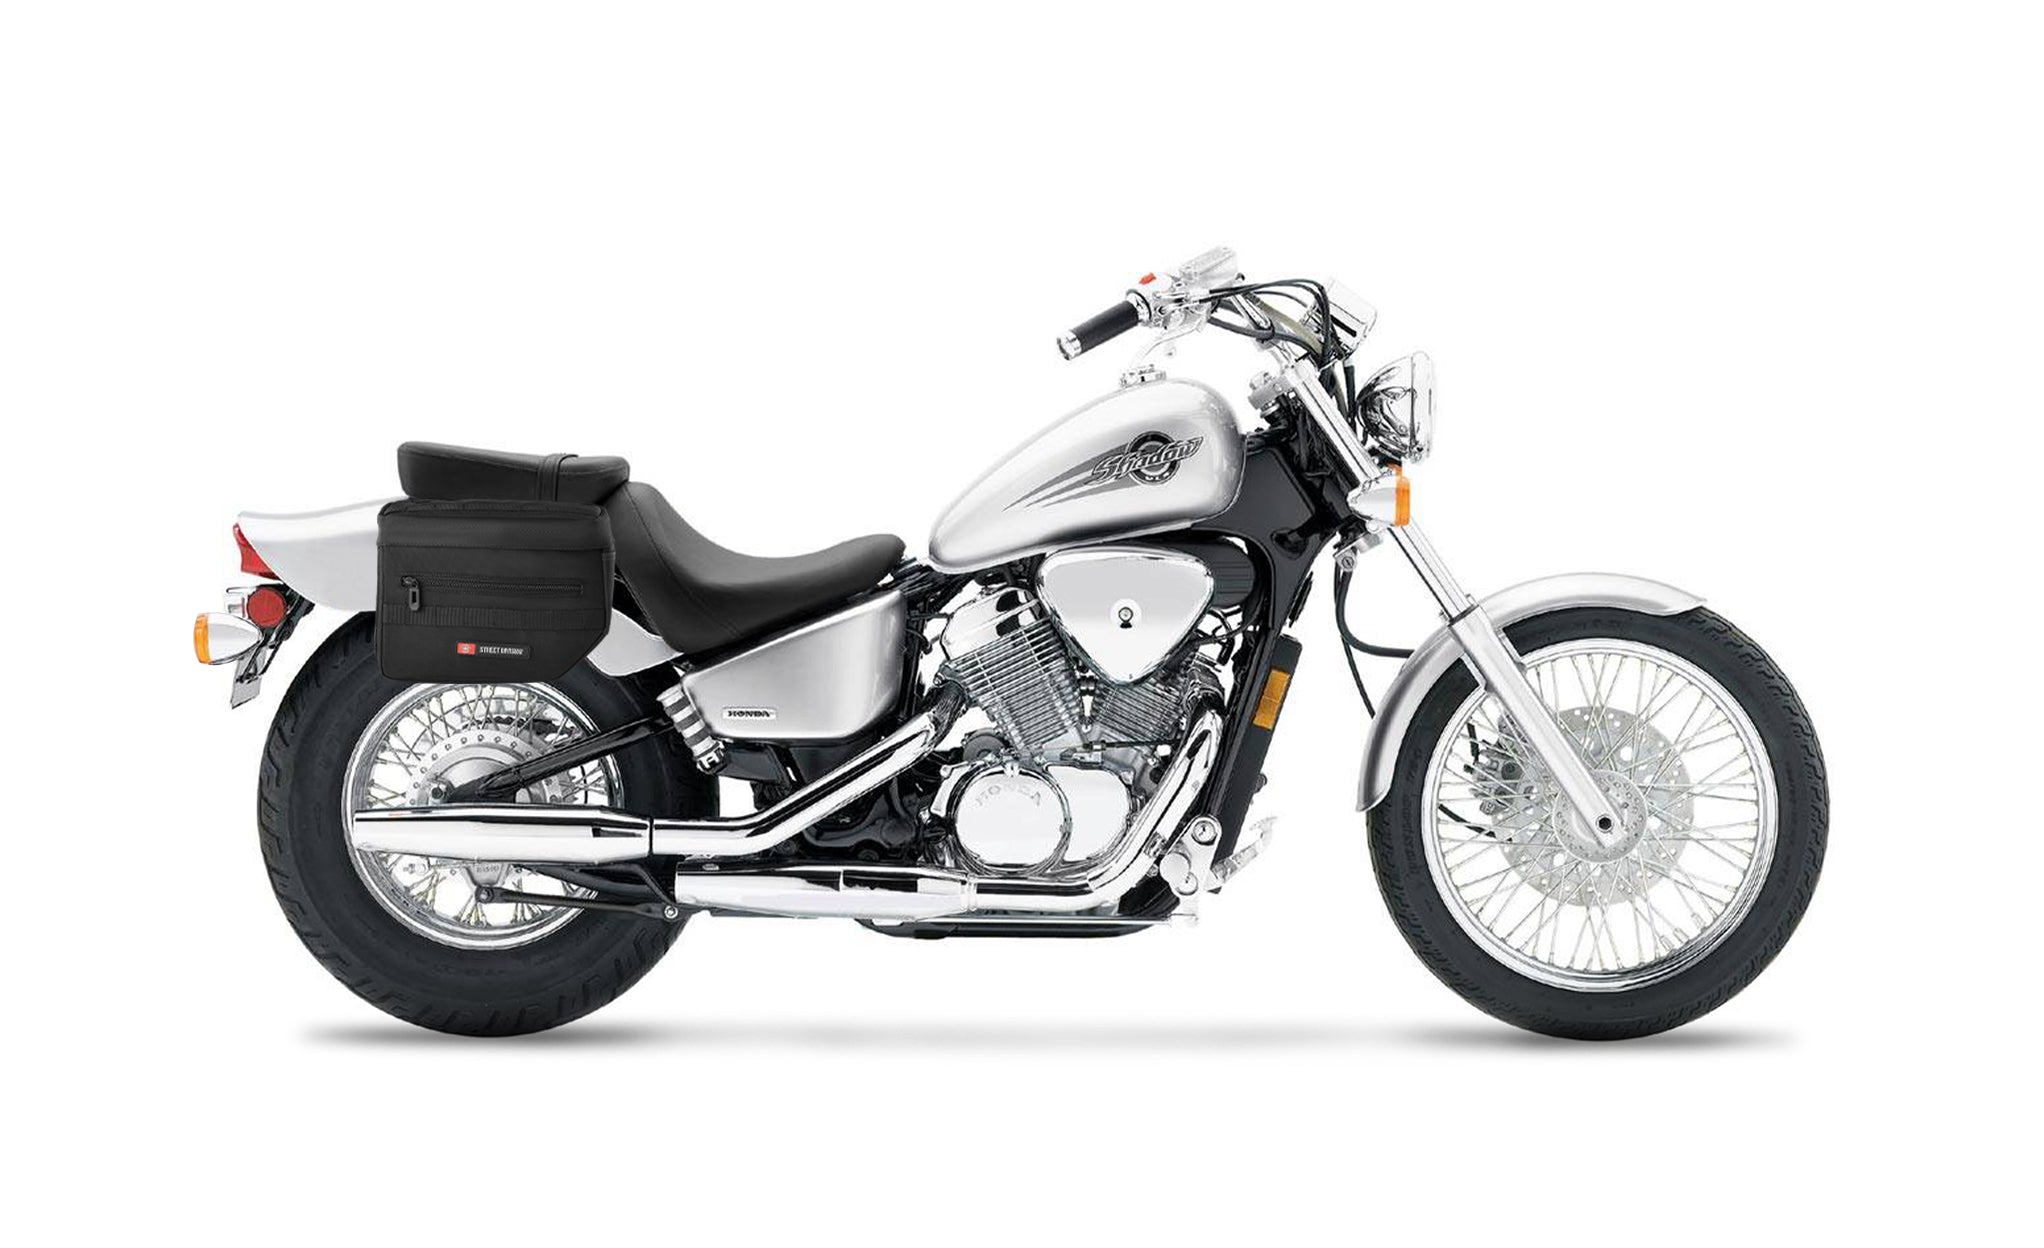 Viking Patriot Small Honda Shadow 600 Vlx Motorcycle Throw Over Saddlebags on Bike Photo @expand